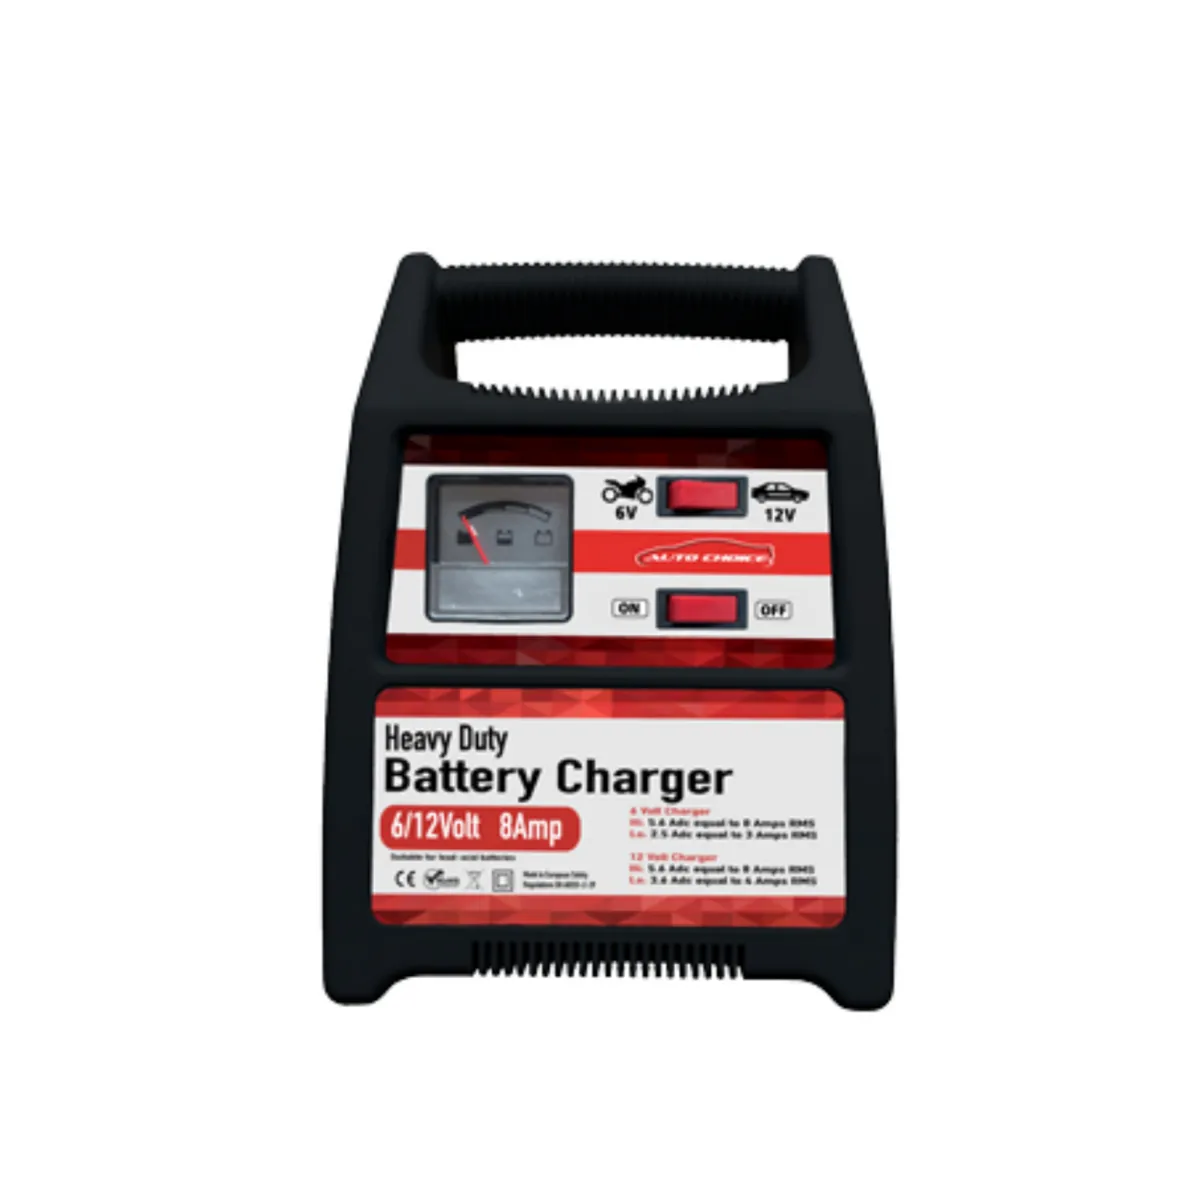 12V 8 Amp Battery Charger